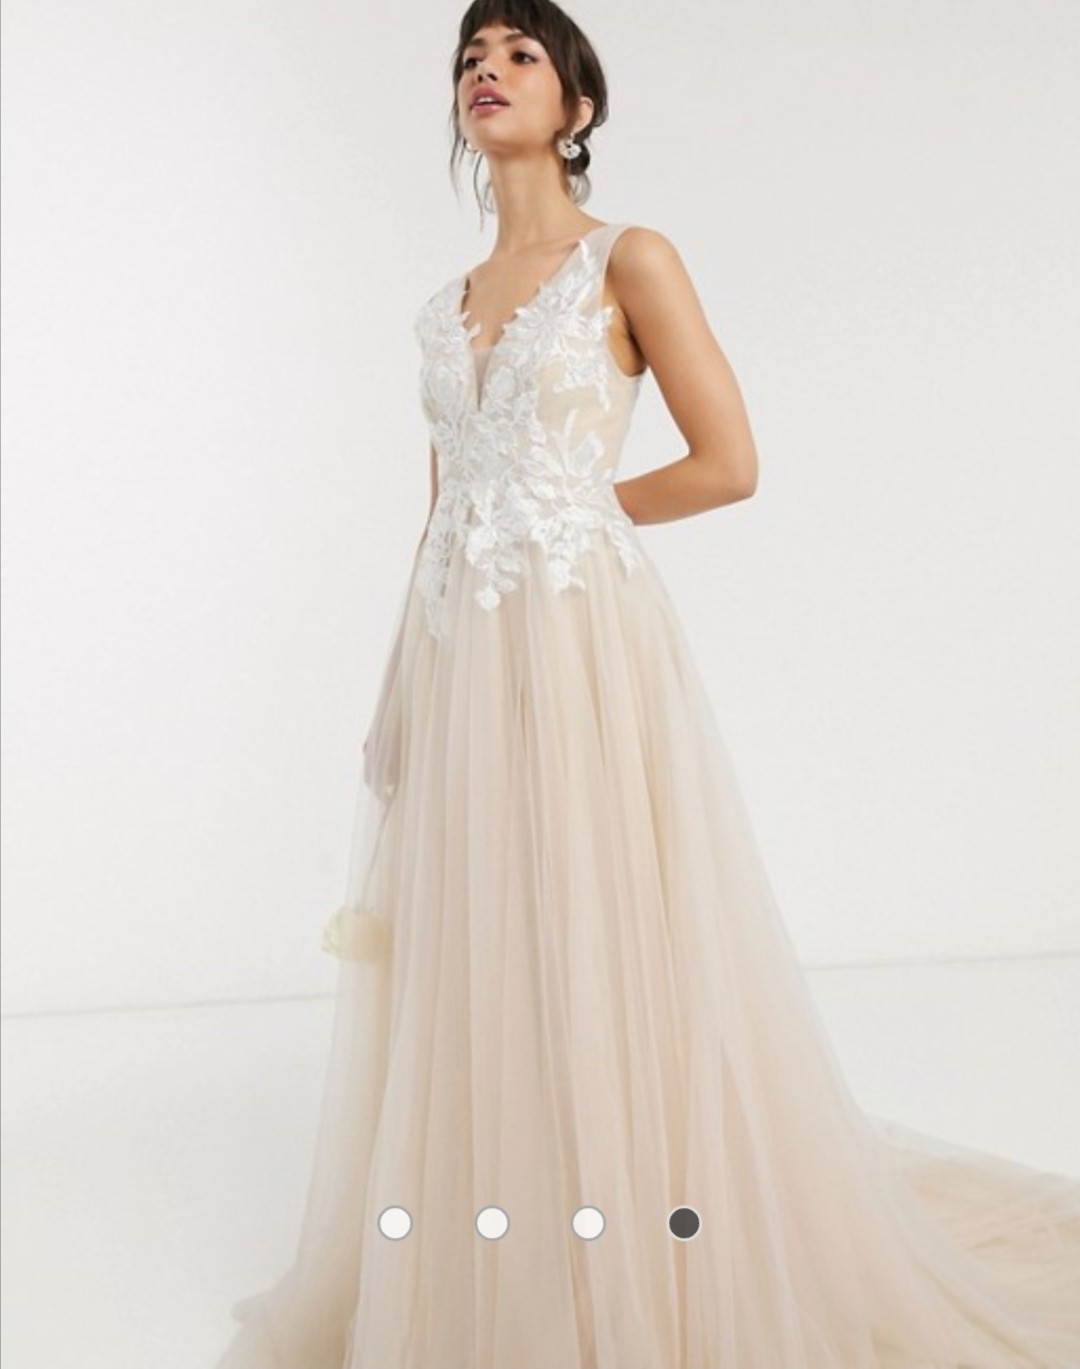 ASOS Bridal New Wedding Dress Save 31% - Stillwhite